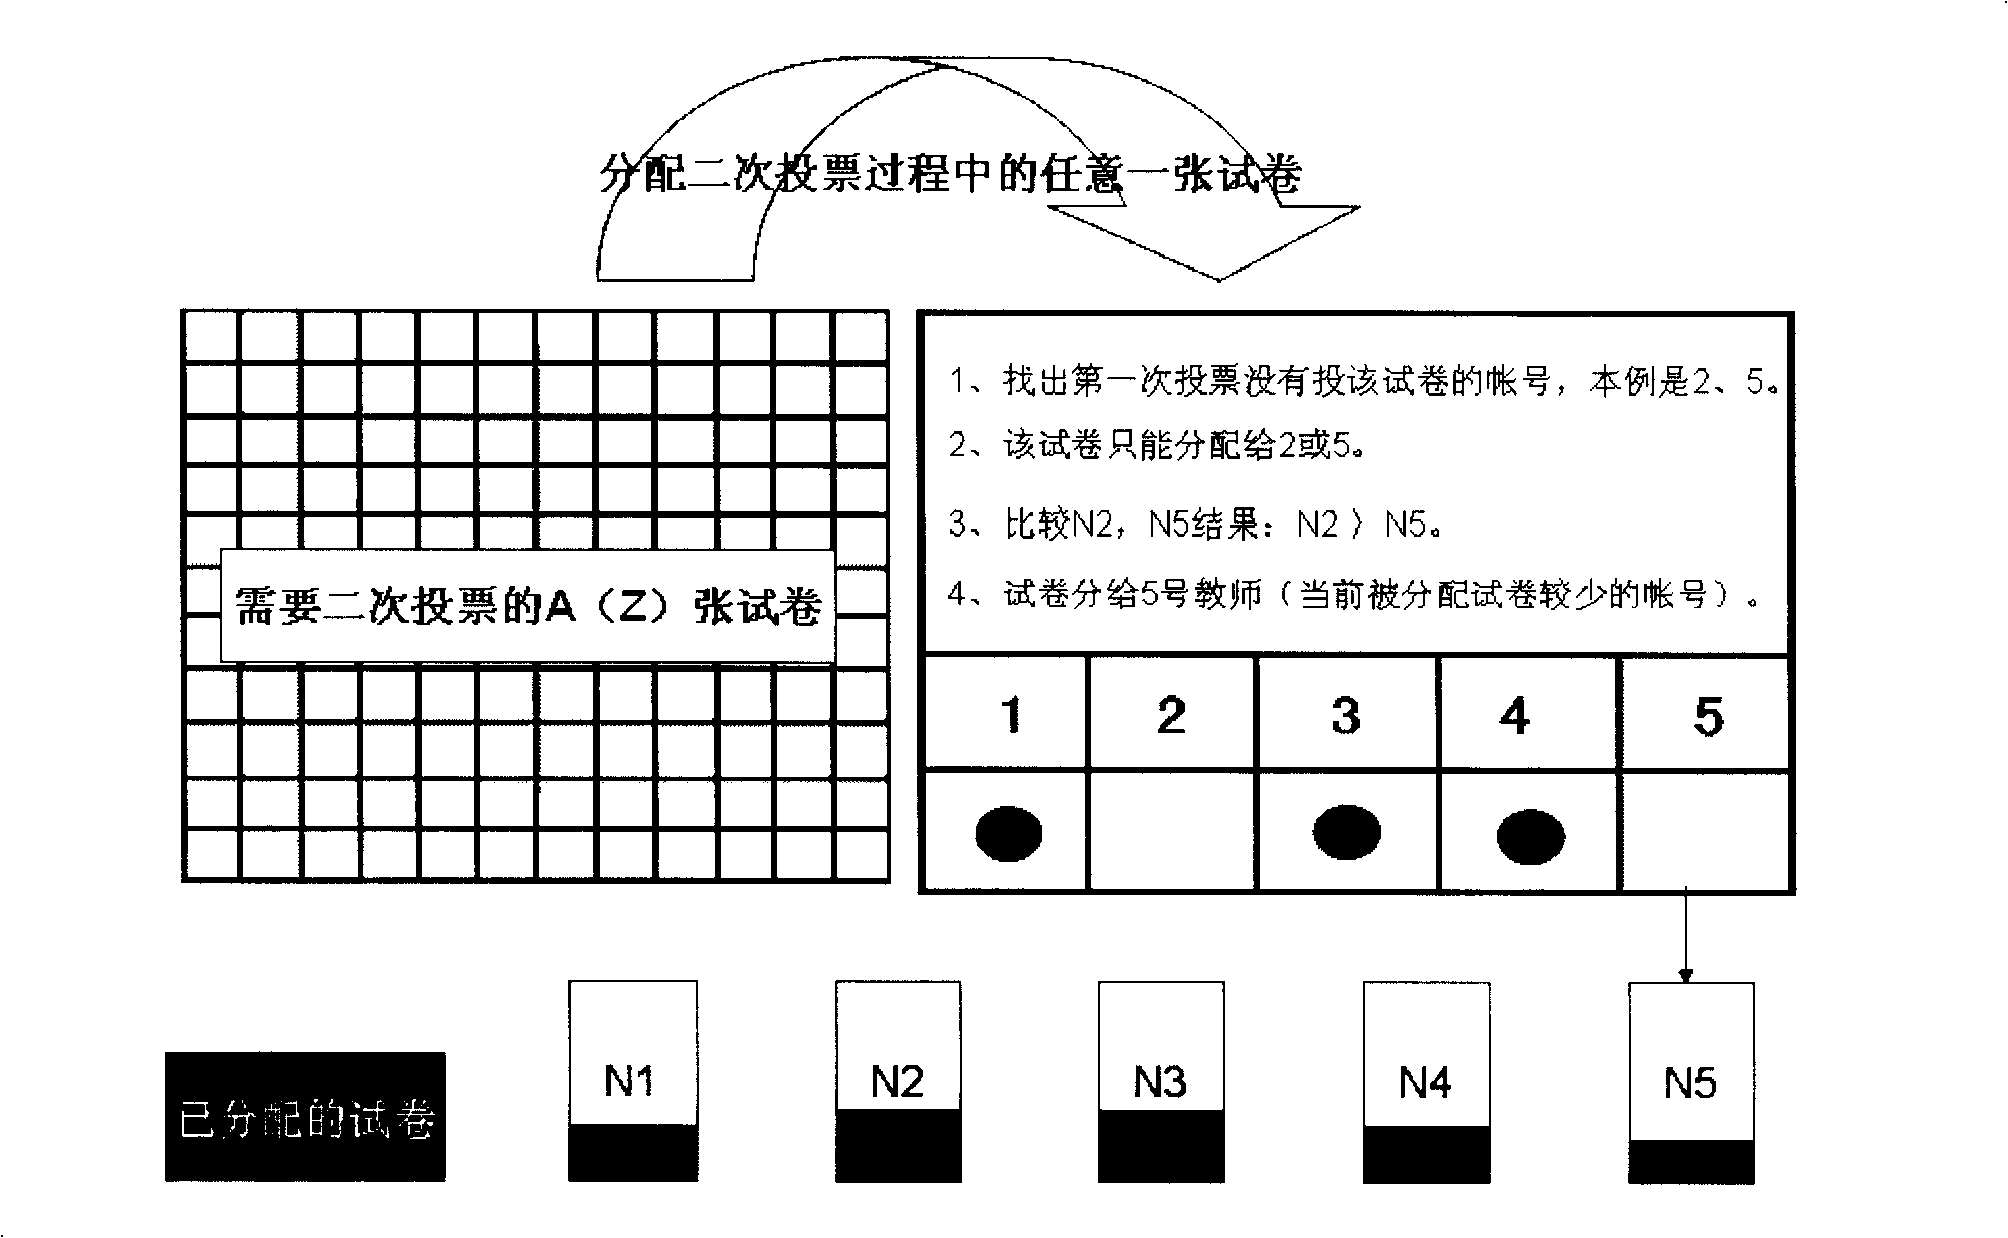 Art test paper computer auxiliary scoring method